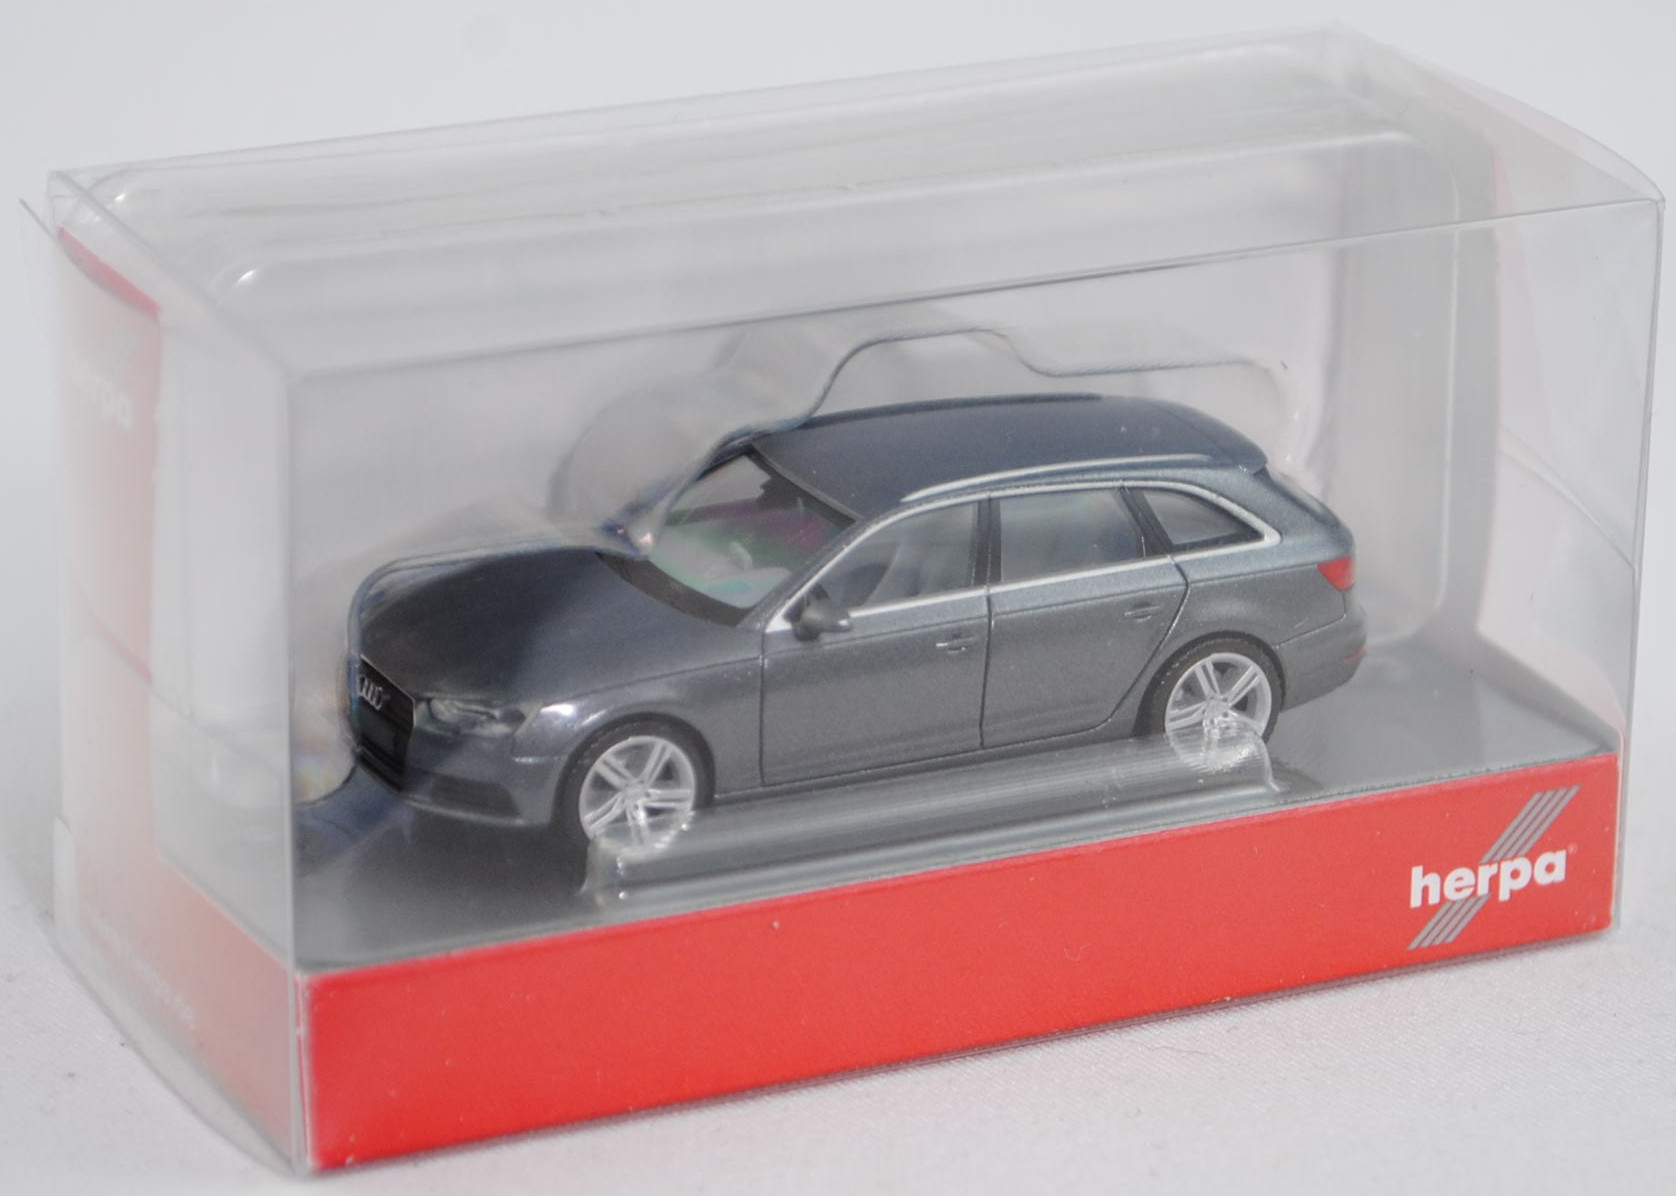 Herpa 038577-004 H0 Audi A4 Avant distriktgrün metalic, Modellautos 1:87  Spur H0